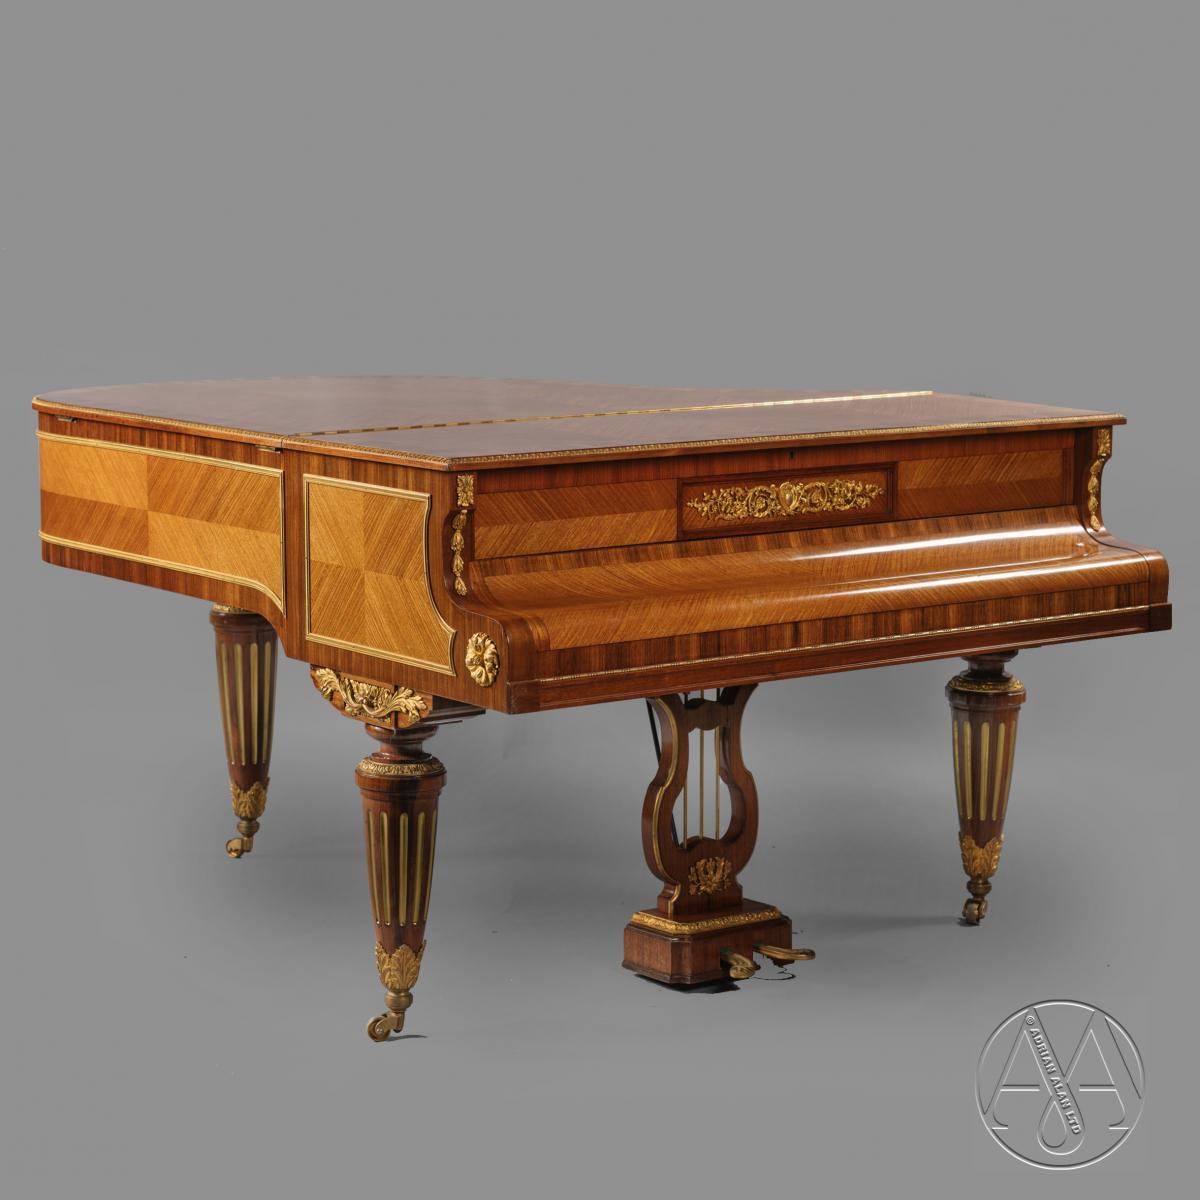 A Fine Louis XVI Style Gilt-Bronze Mounted Baby Grand Piano by Gaveau à Paris